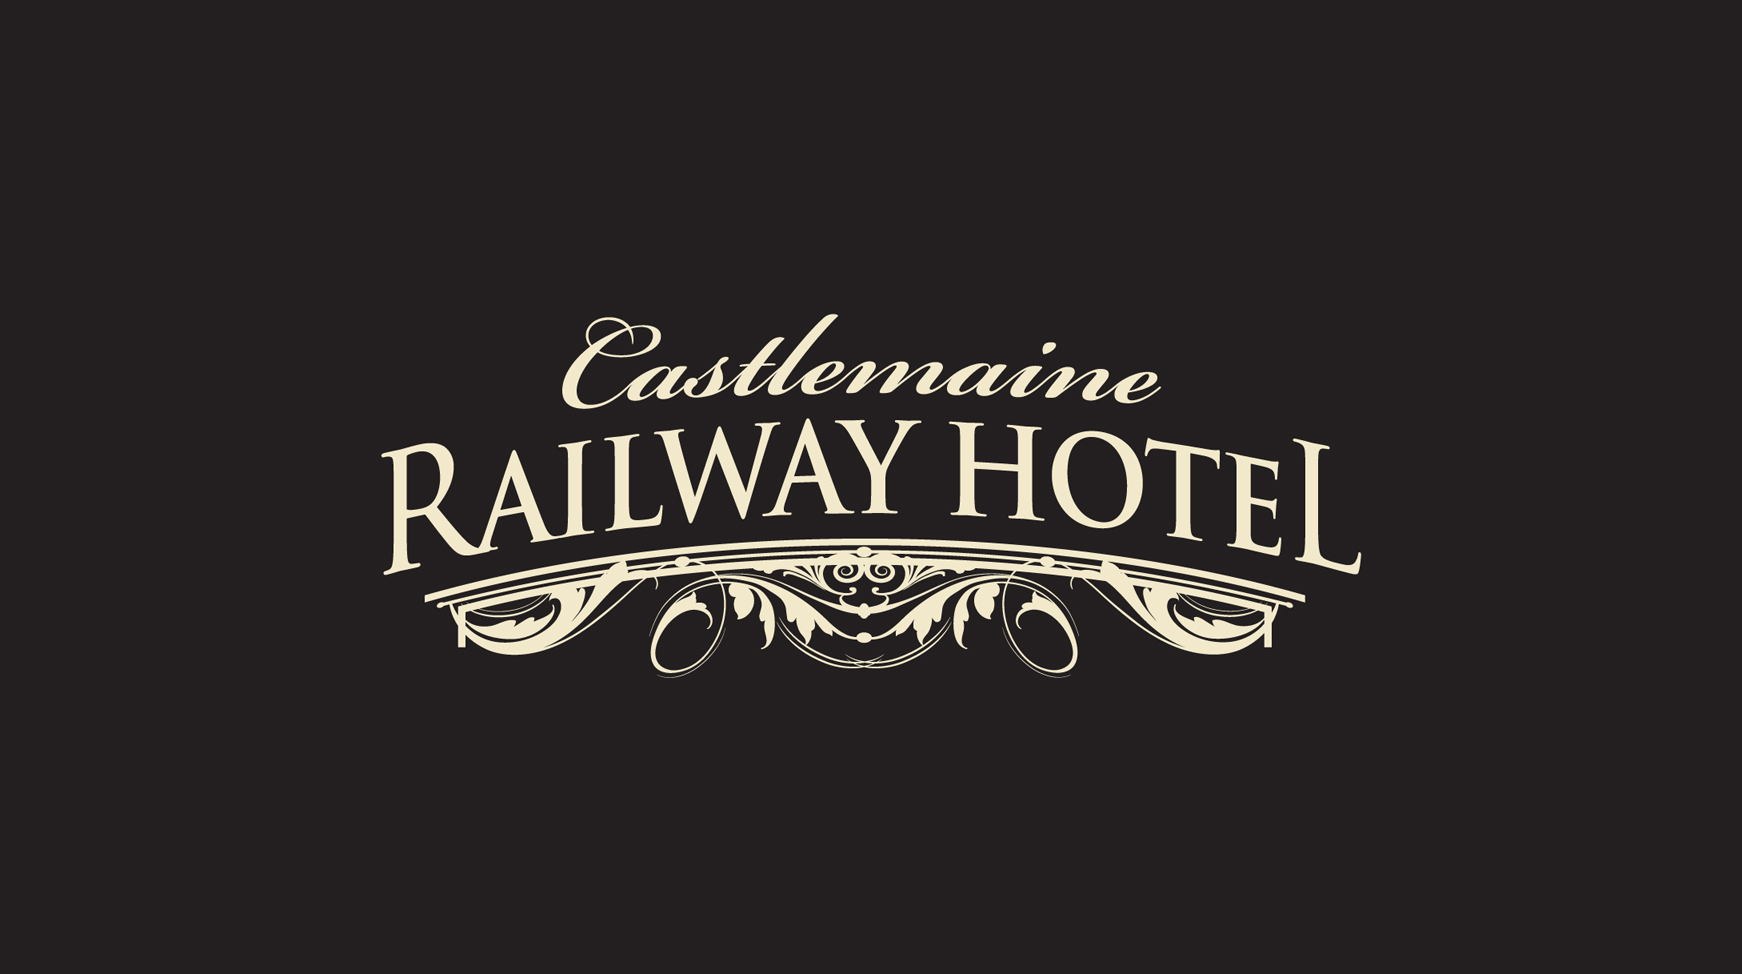 Railway Hotel Castlemaine - Accommodation Resorts